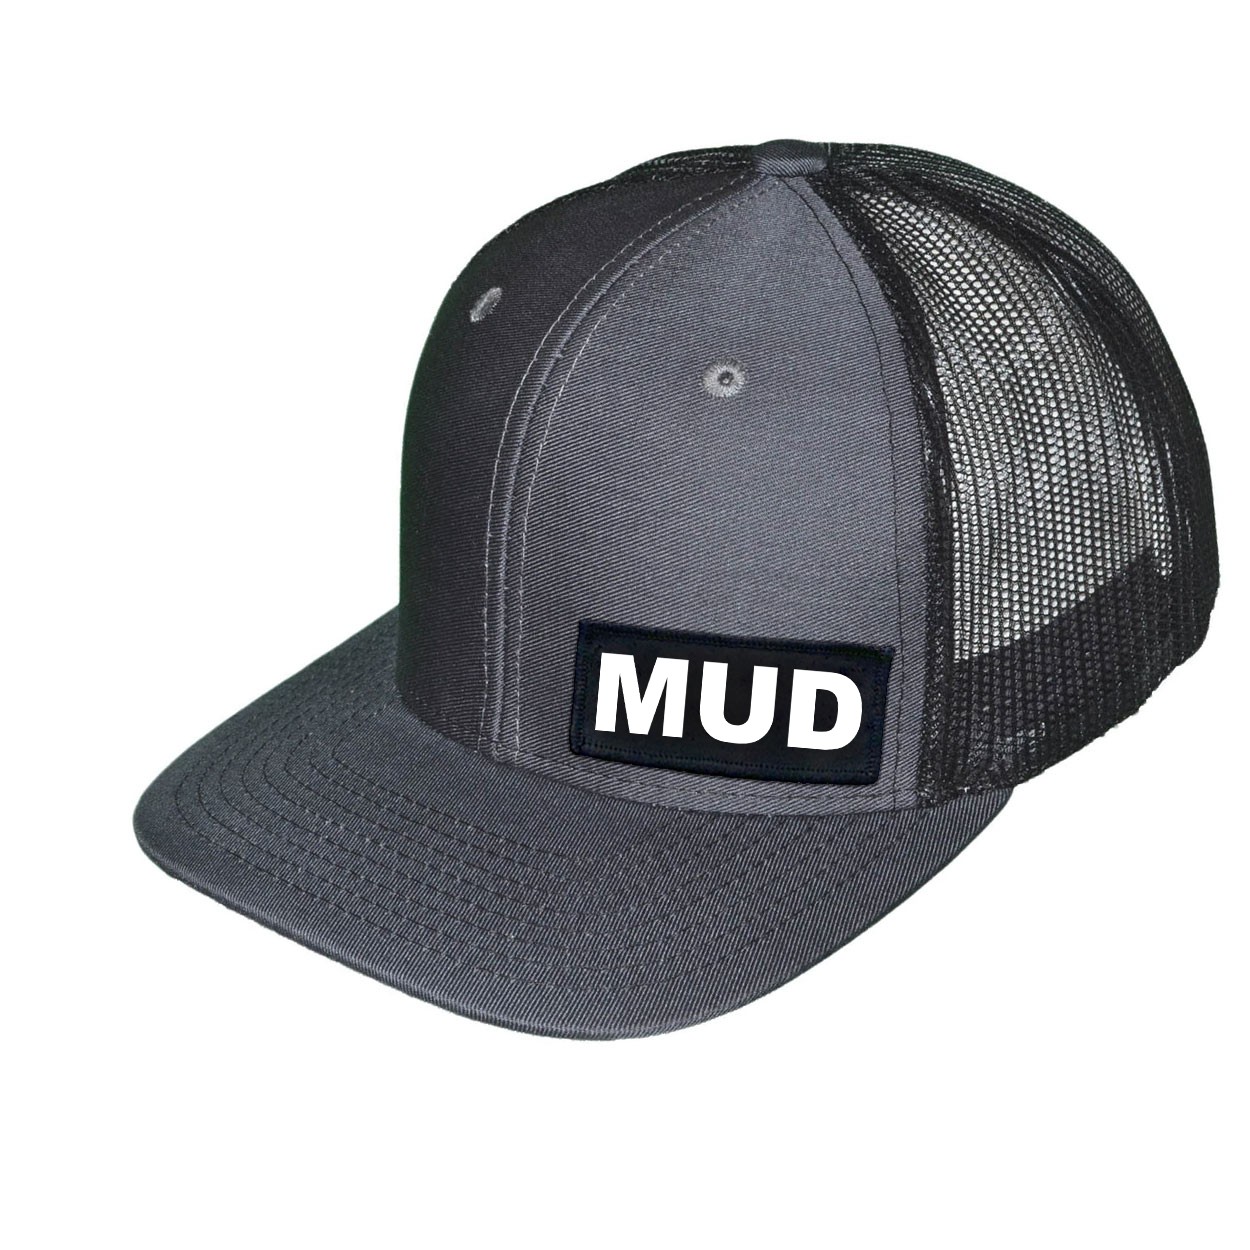 Mud Brand Logo Night Out Woven Patch Snapback Trucker Hat Dark Gray/Black (White Logo)